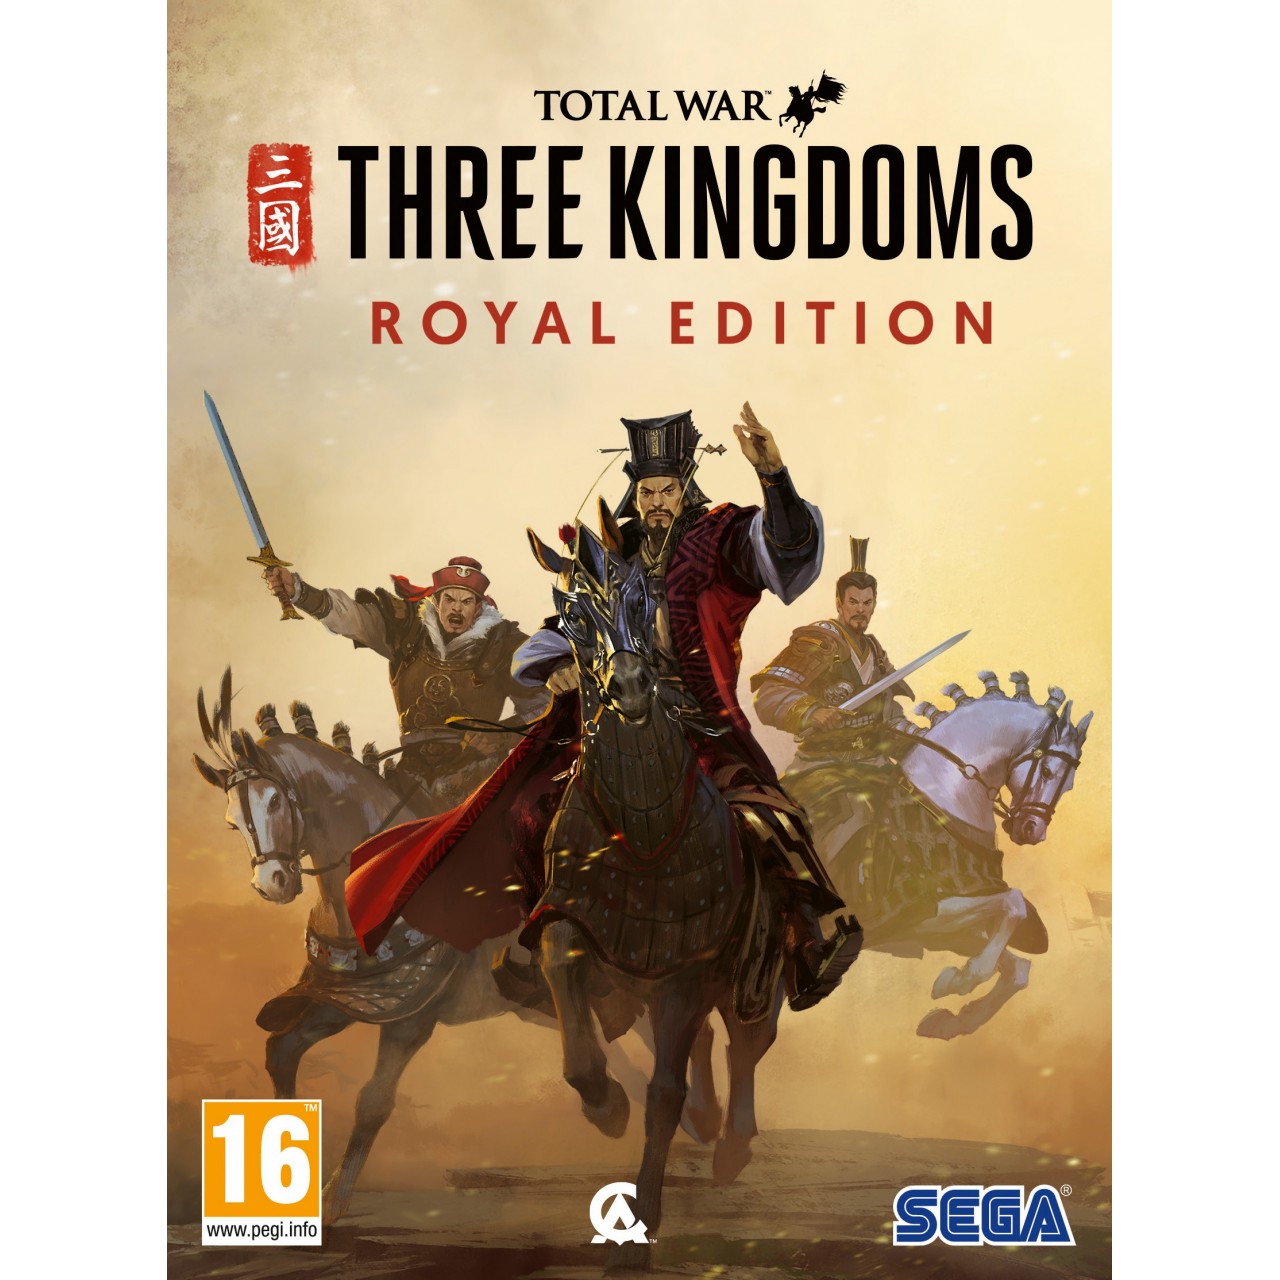 TOTAL WAR: THREE KINGDOMS – ROYAL EDITION PC - 4999